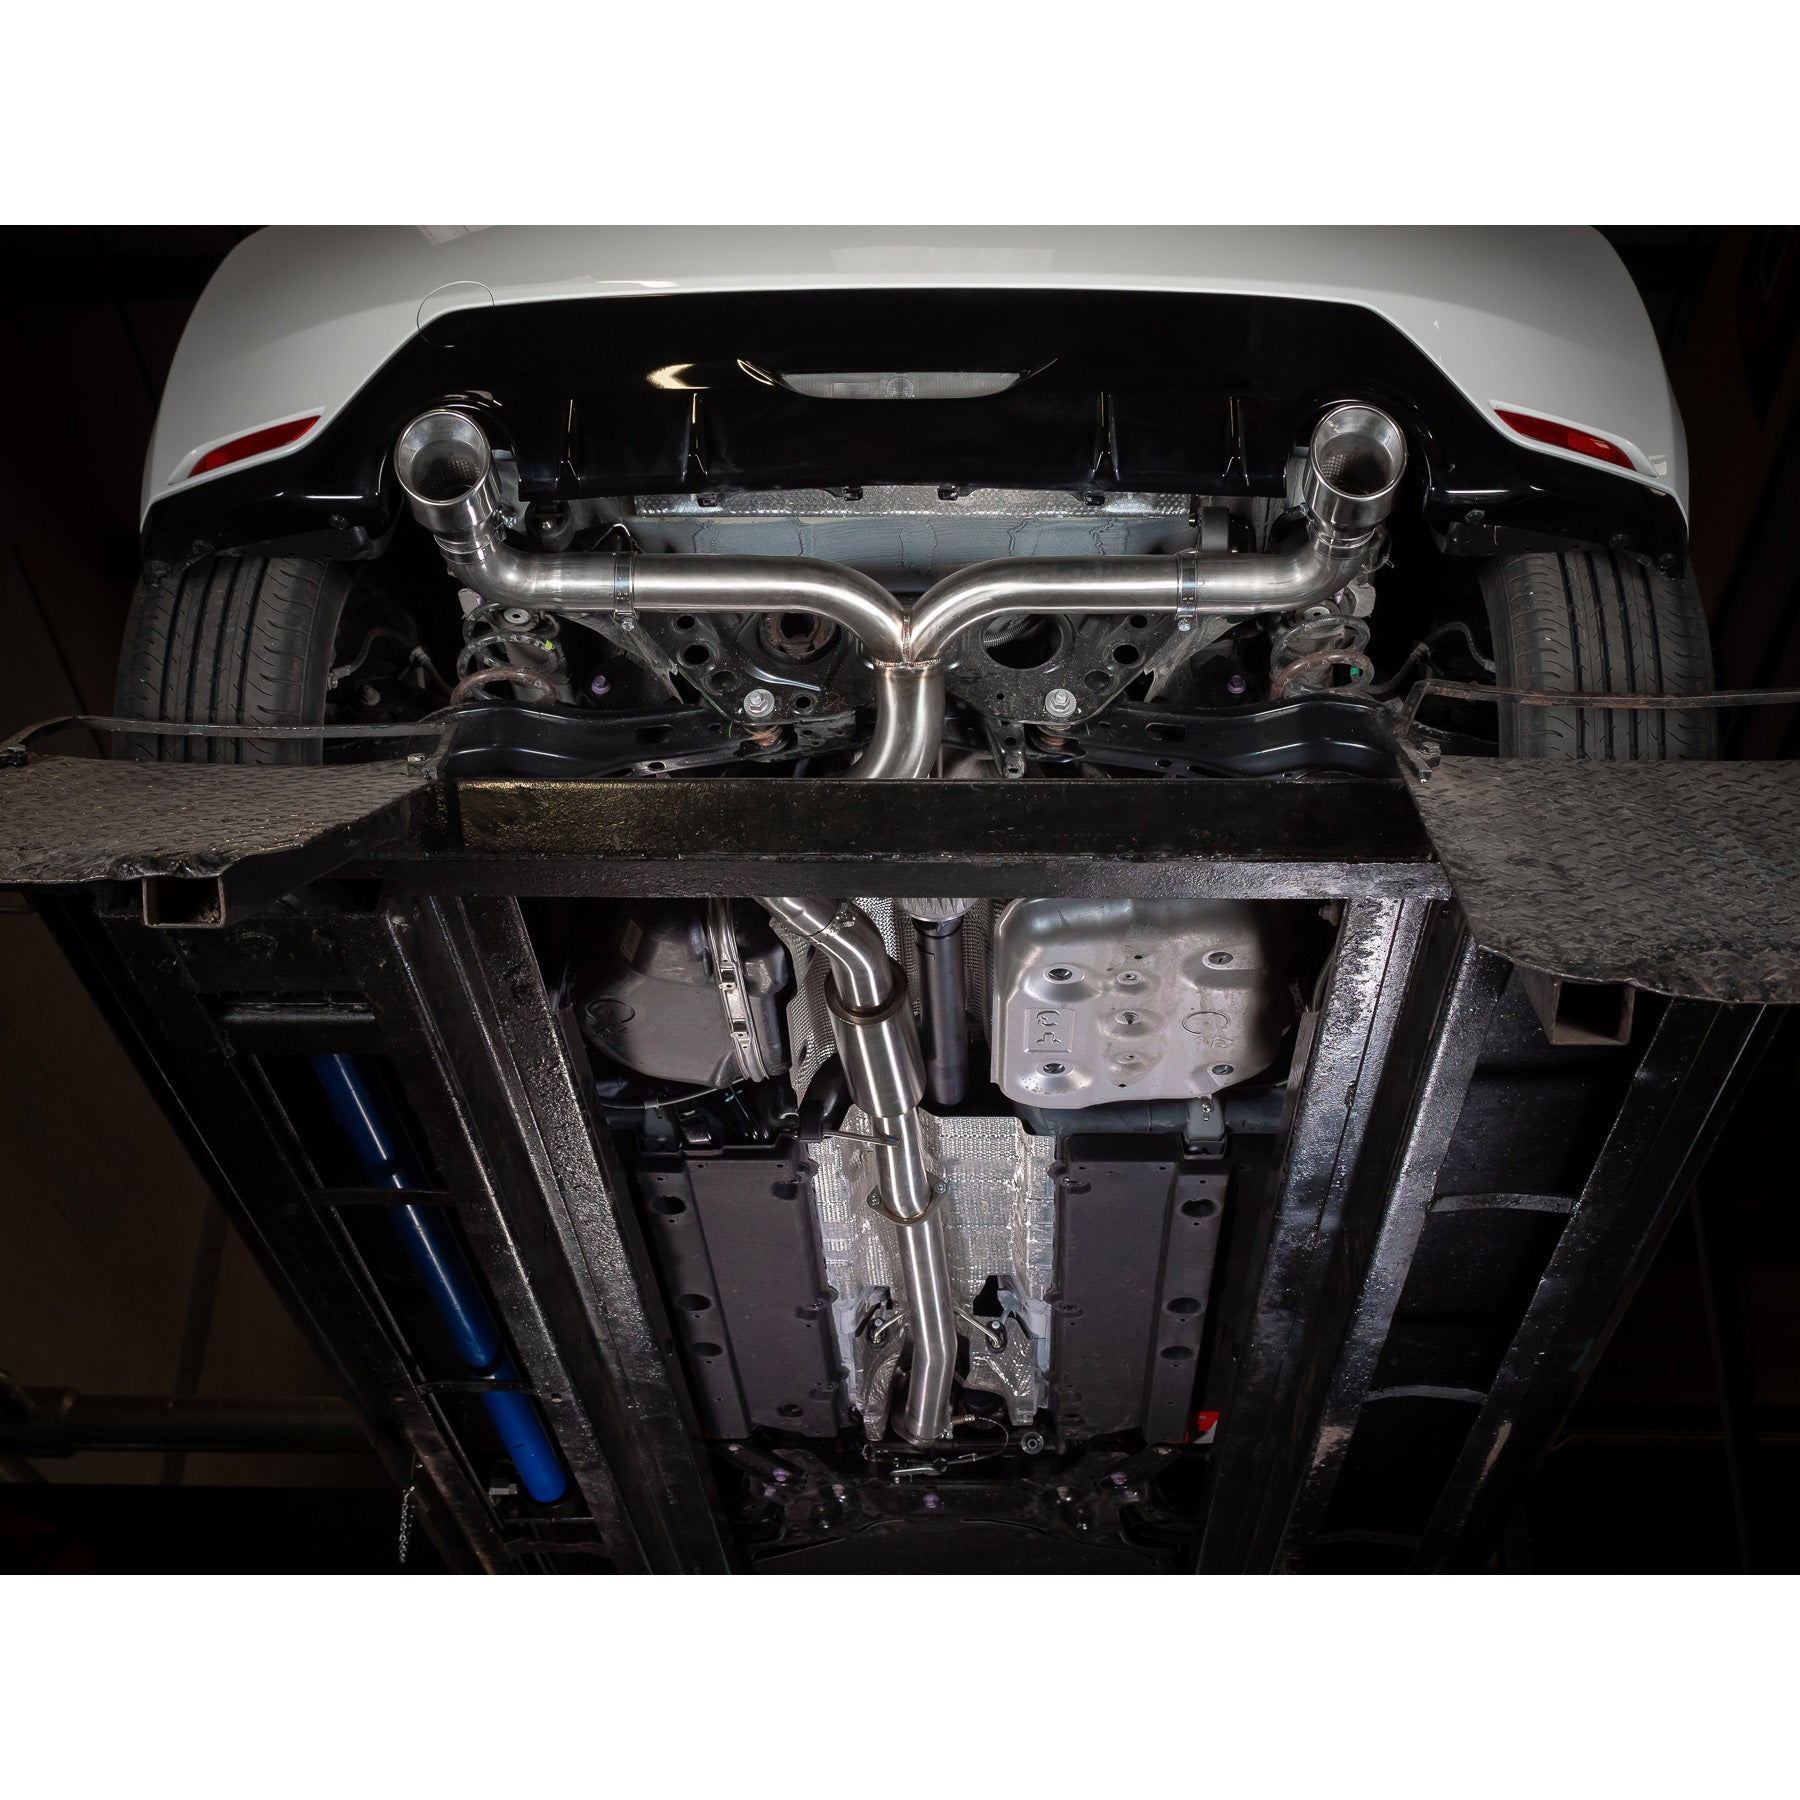 Toyota GR Yaris 1.6 Cat Back Performance Exhaust - Wayside Performance 